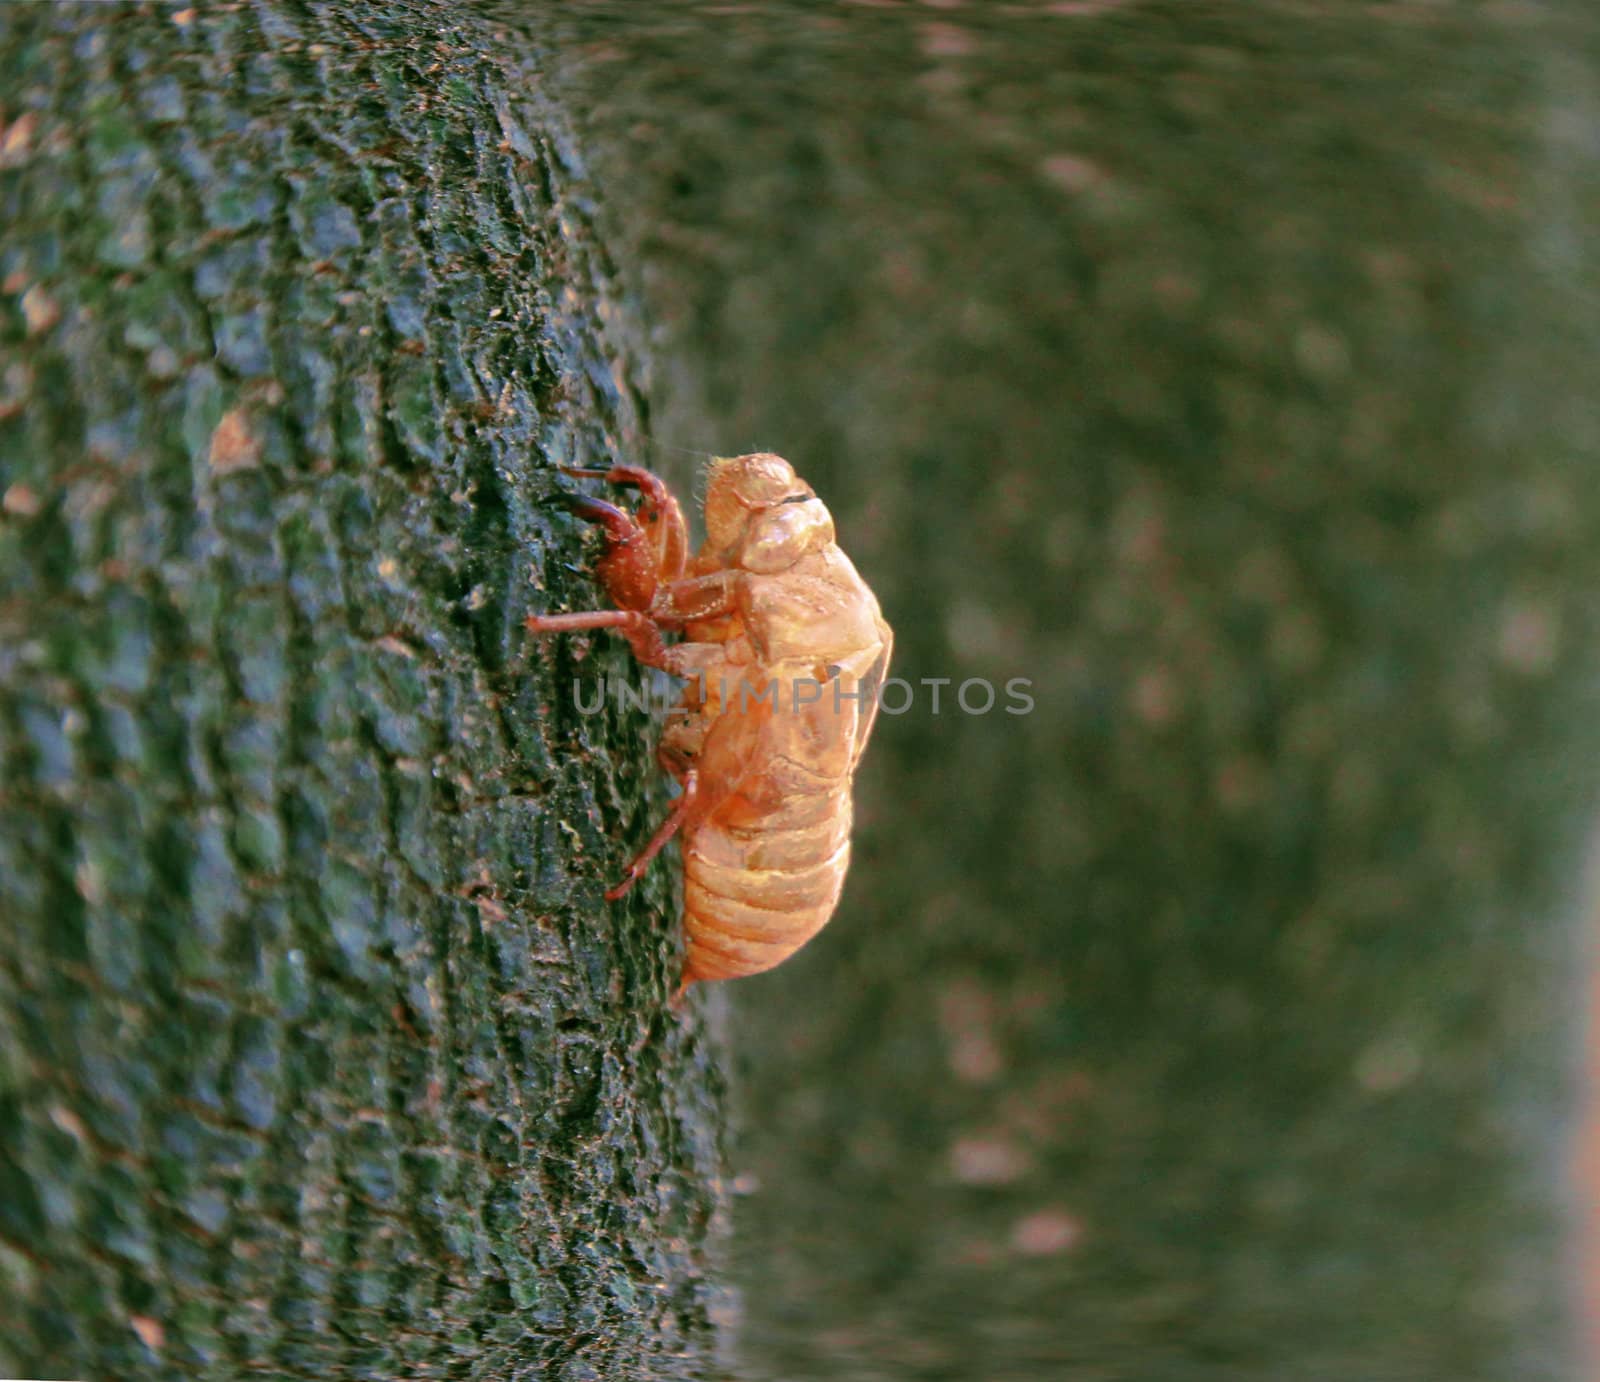 cicada slough on a stick by sutipp11